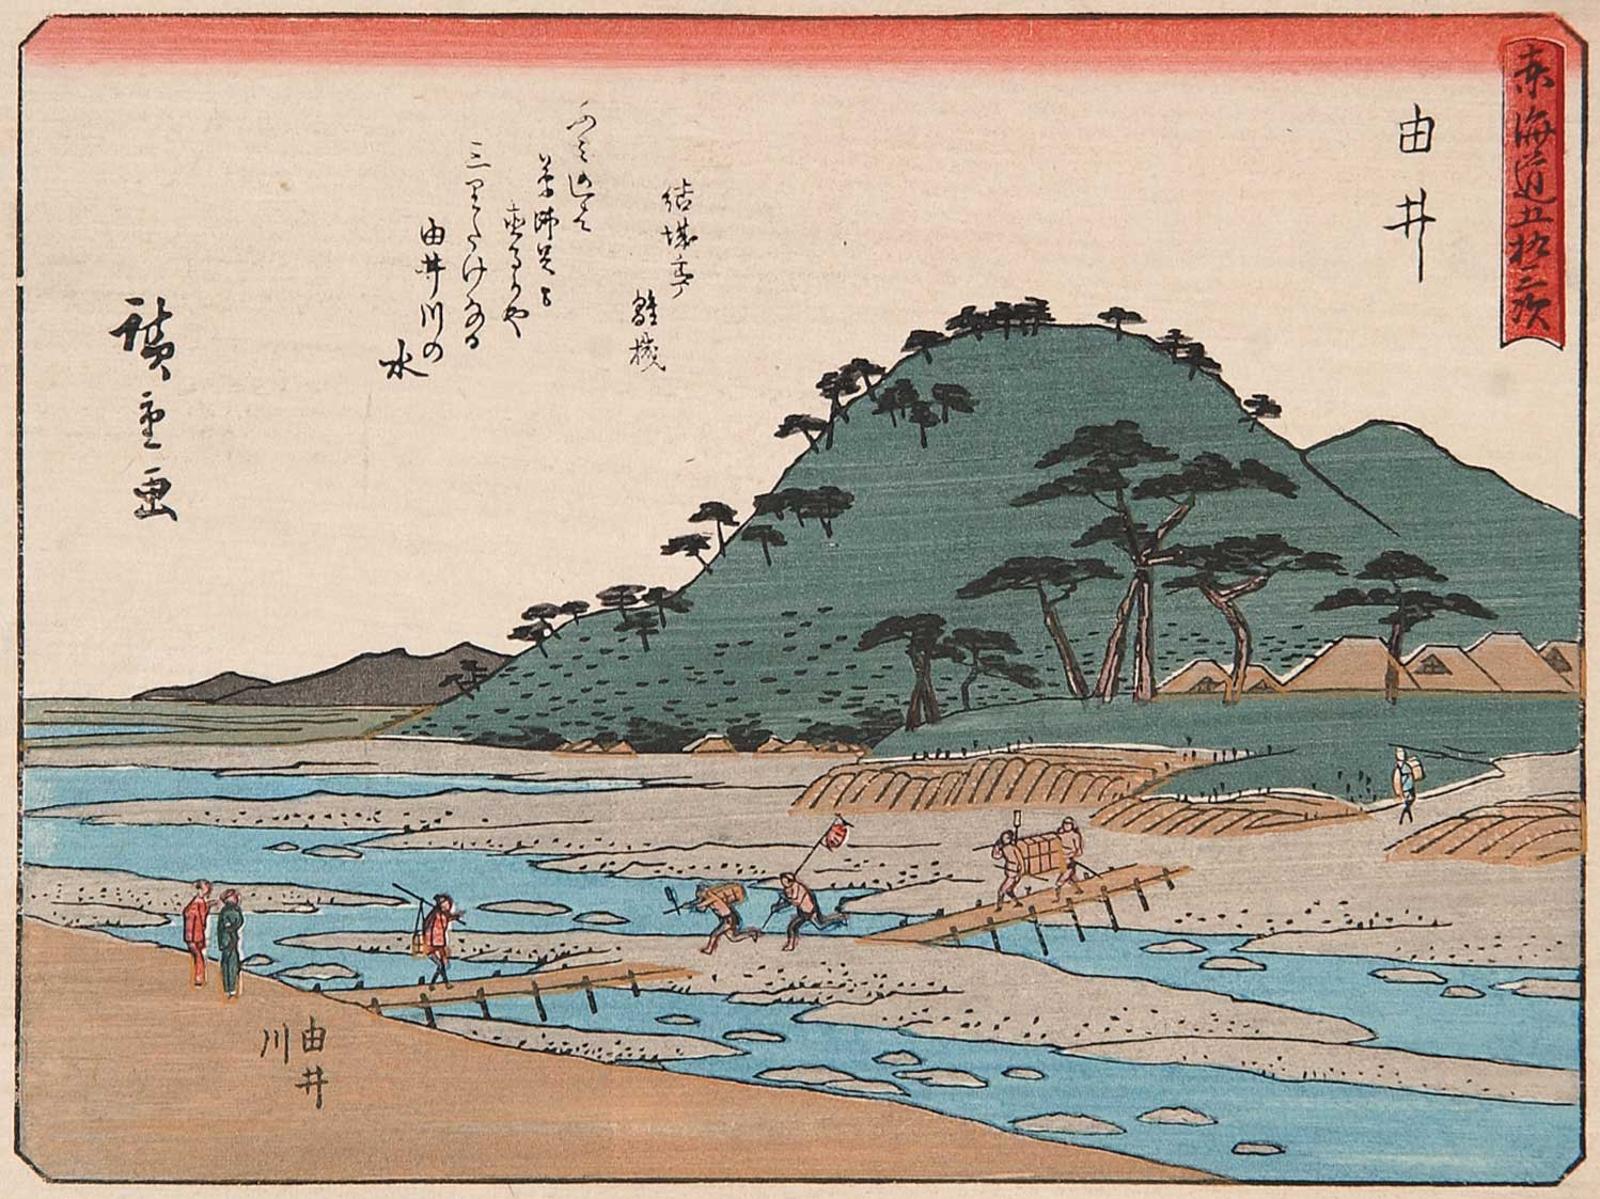 Ando Utagawa Hiroshige (1797-1858) - Untitled - Sandbars